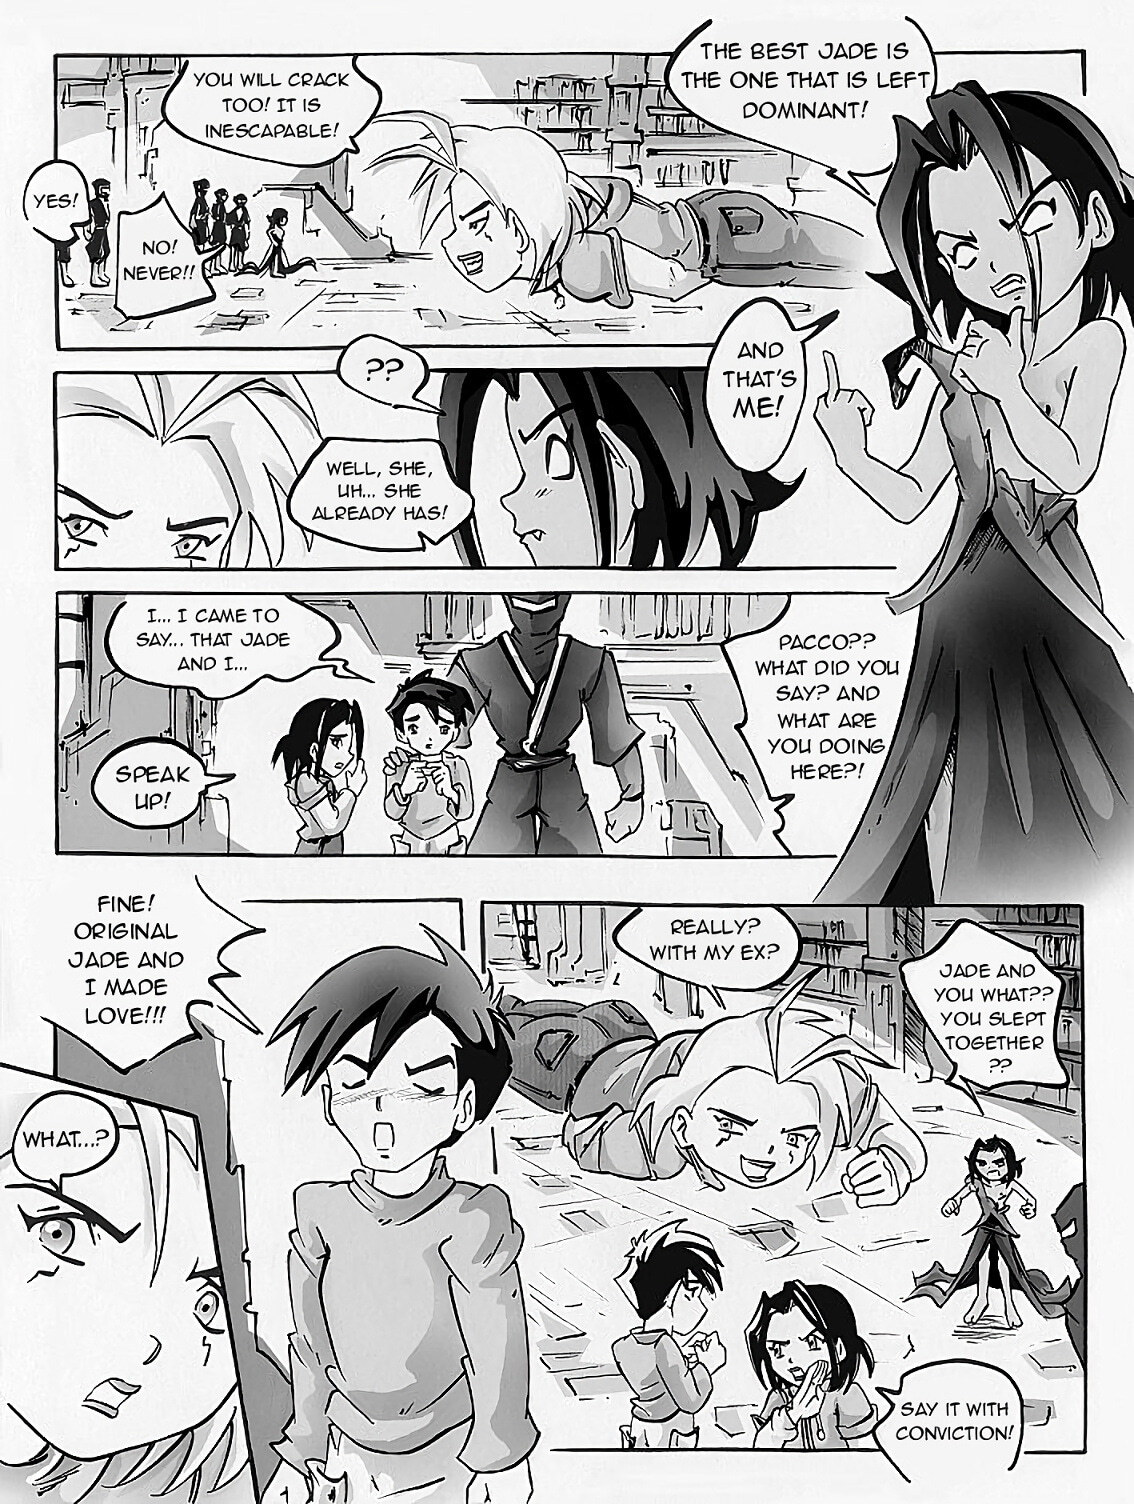 Jade Adventure - Page 112